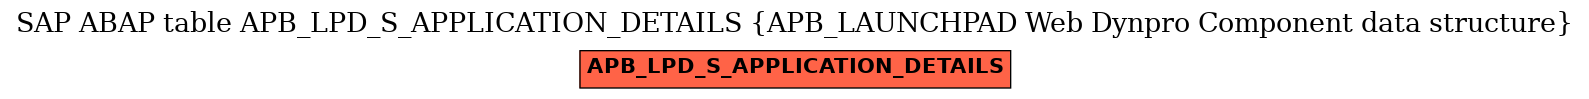 E-R Diagram for table APB_LPD_S_APPLICATION_DETAILS (APB_LAUNCHPAD Web Dynpro Component data structure)